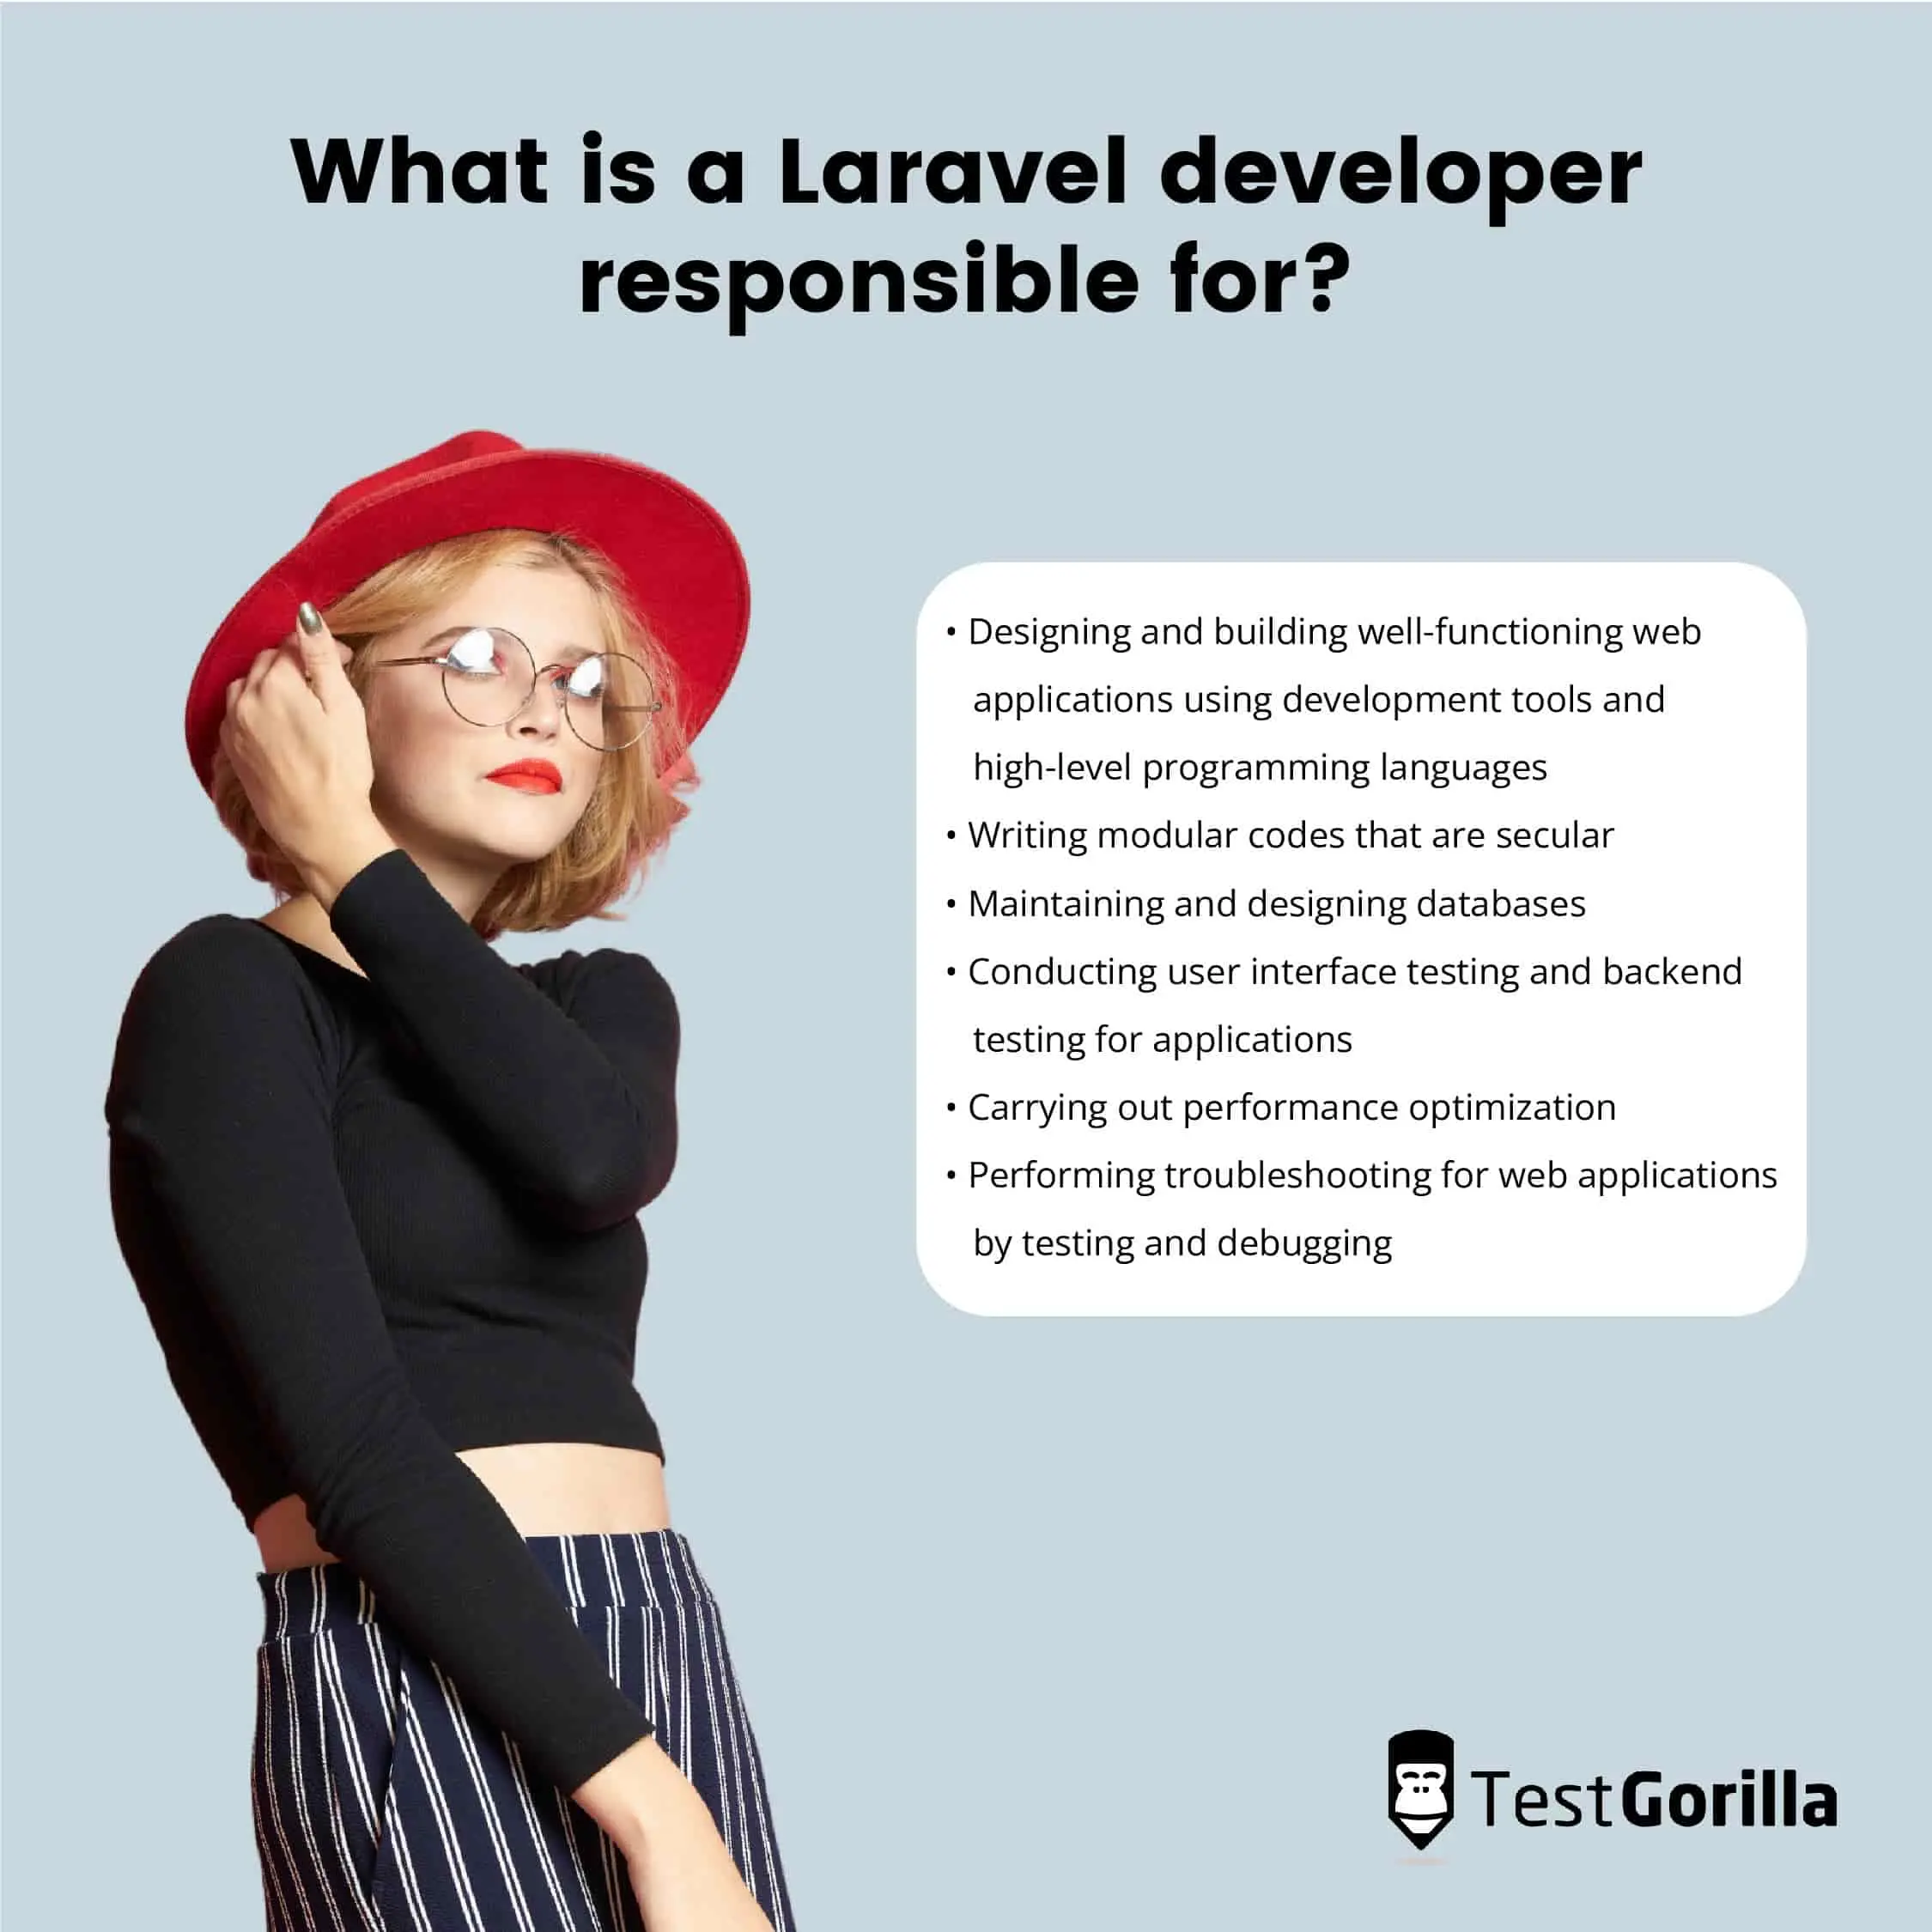 image listing the responsibilities of a laravel developer